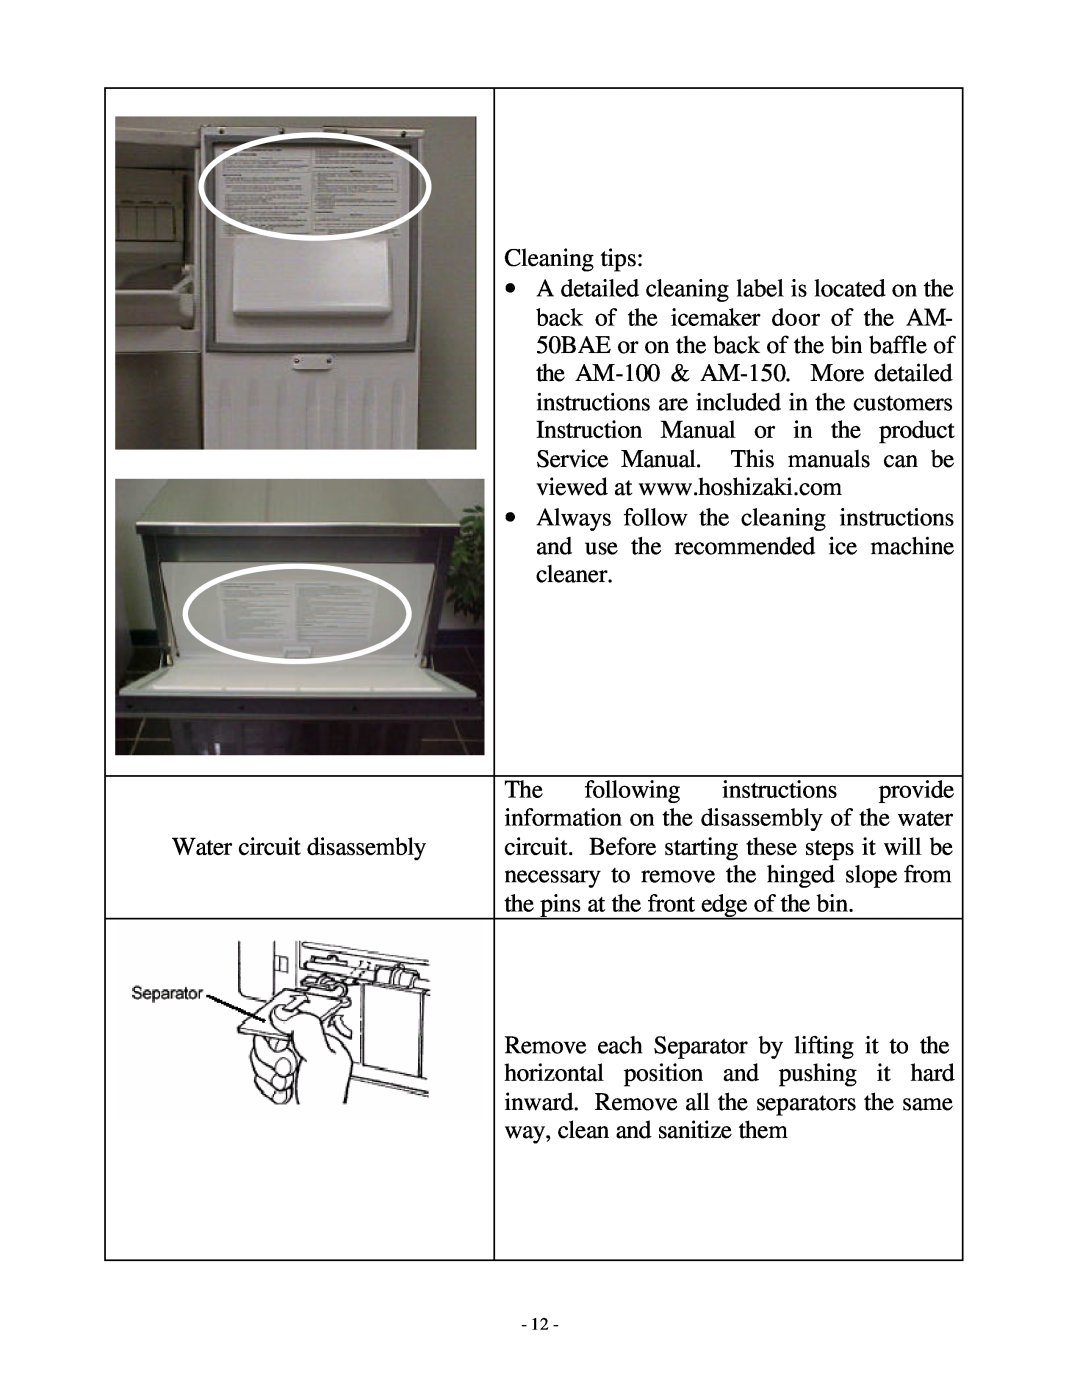 Hoshizaki AM-50BAE manual Cleaning tips 